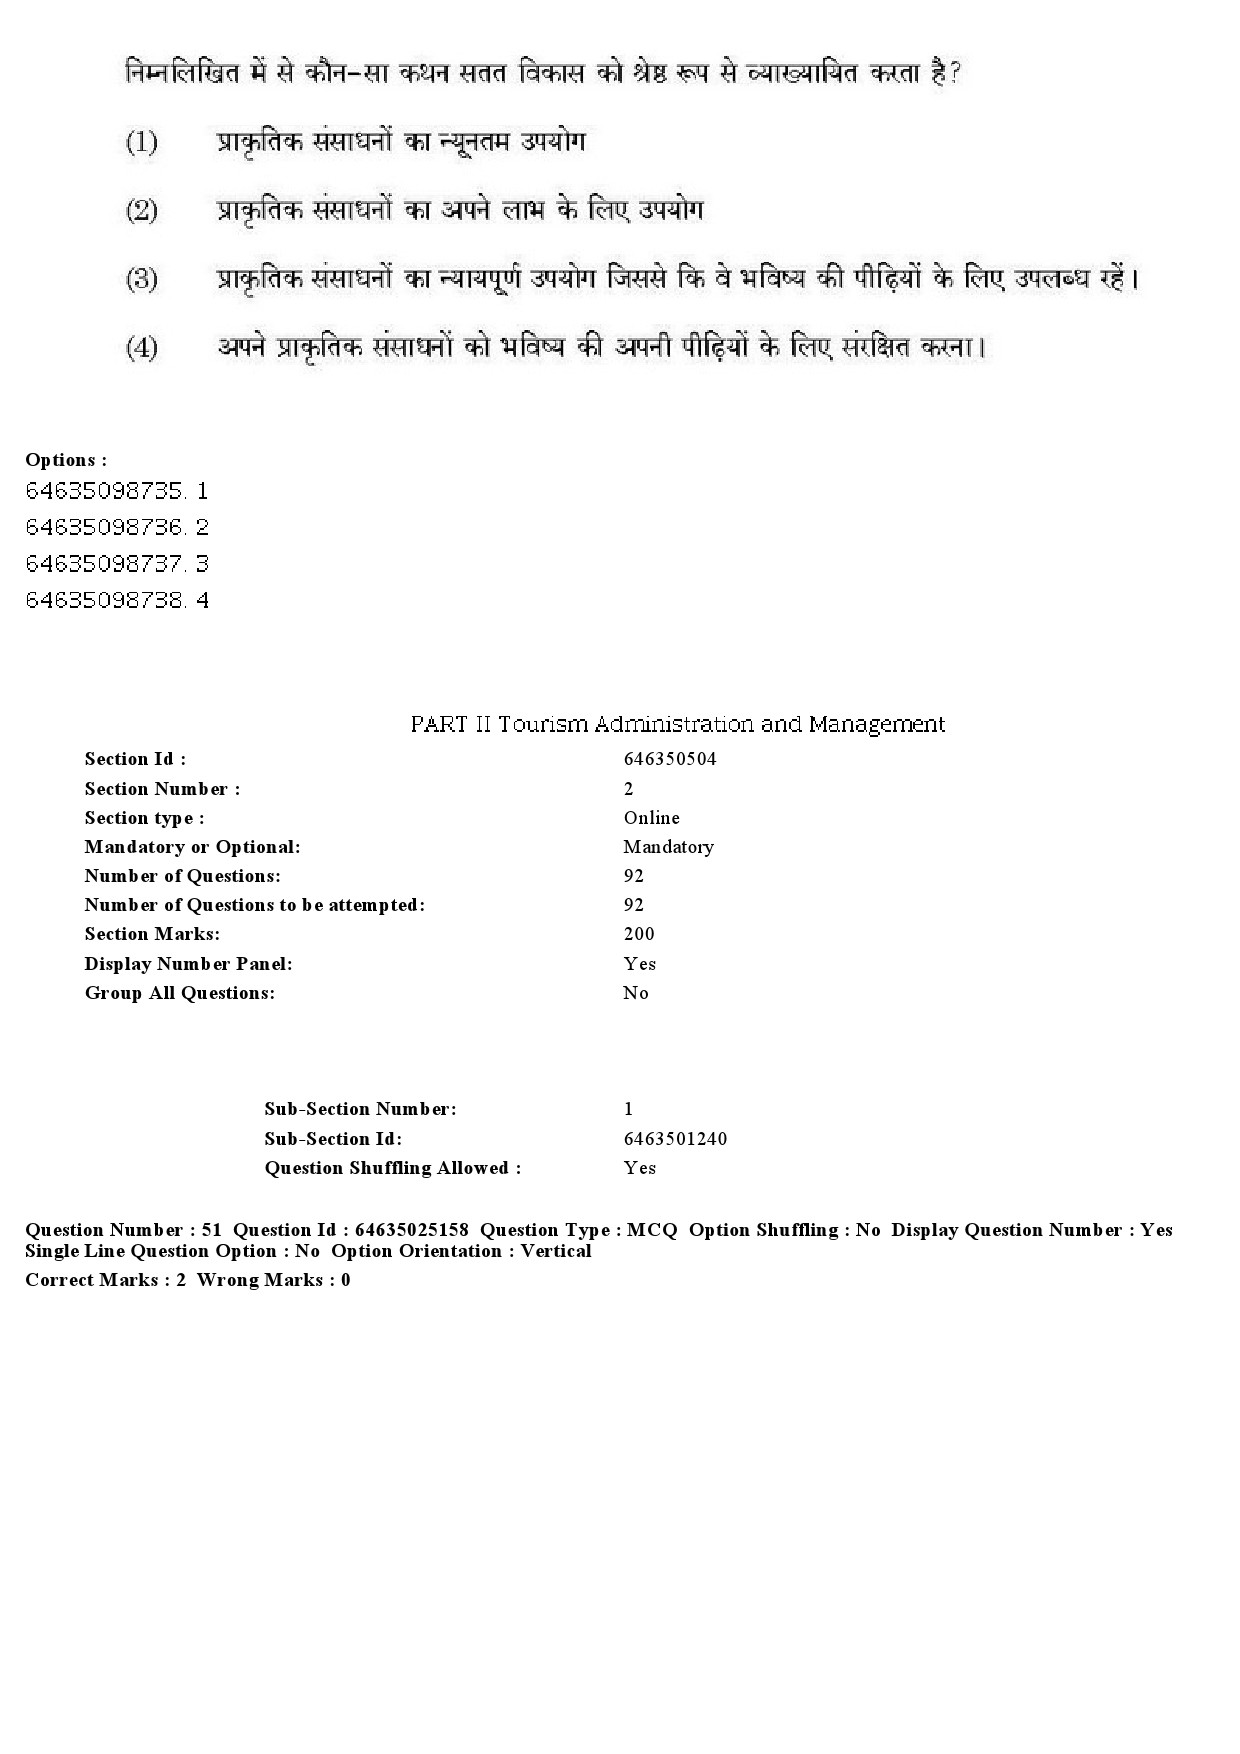 UGC NET Tourism Administration And Management Question Paper June 2019 40